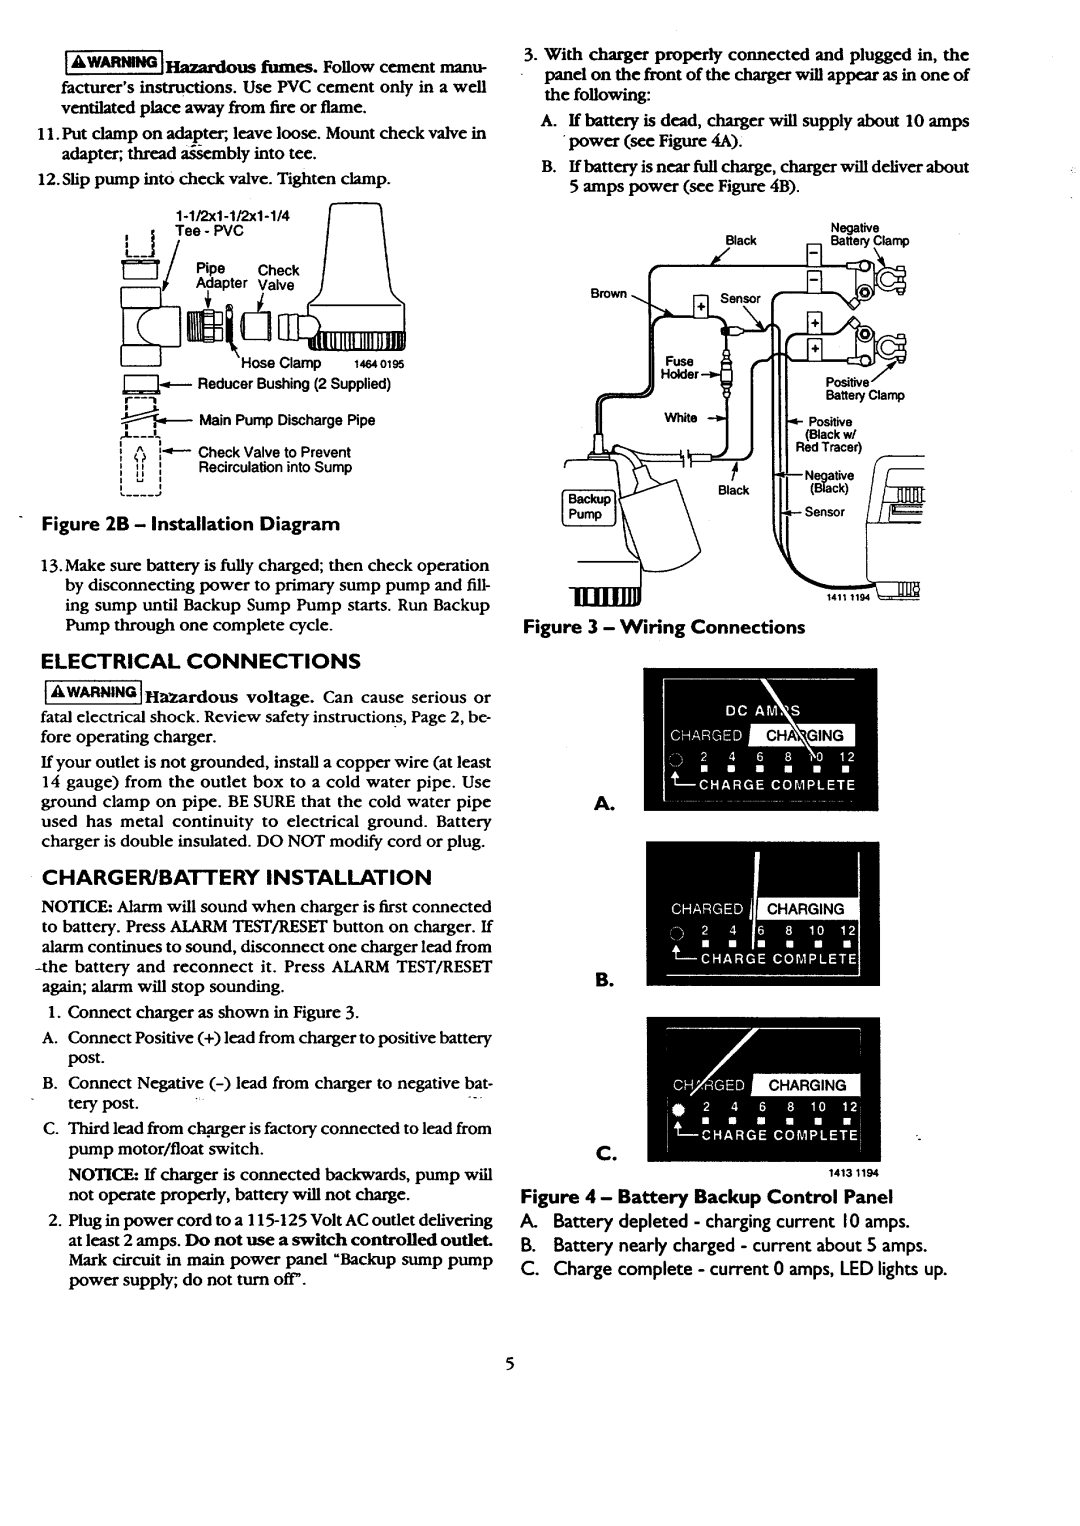 Sears 390.306062 Slip pump into check valve. Tighten clamp, 1-1/2x1-1/2x1-1/4, L5JZ /Tee PVC, Pipe, Check, ValveC, voltage 